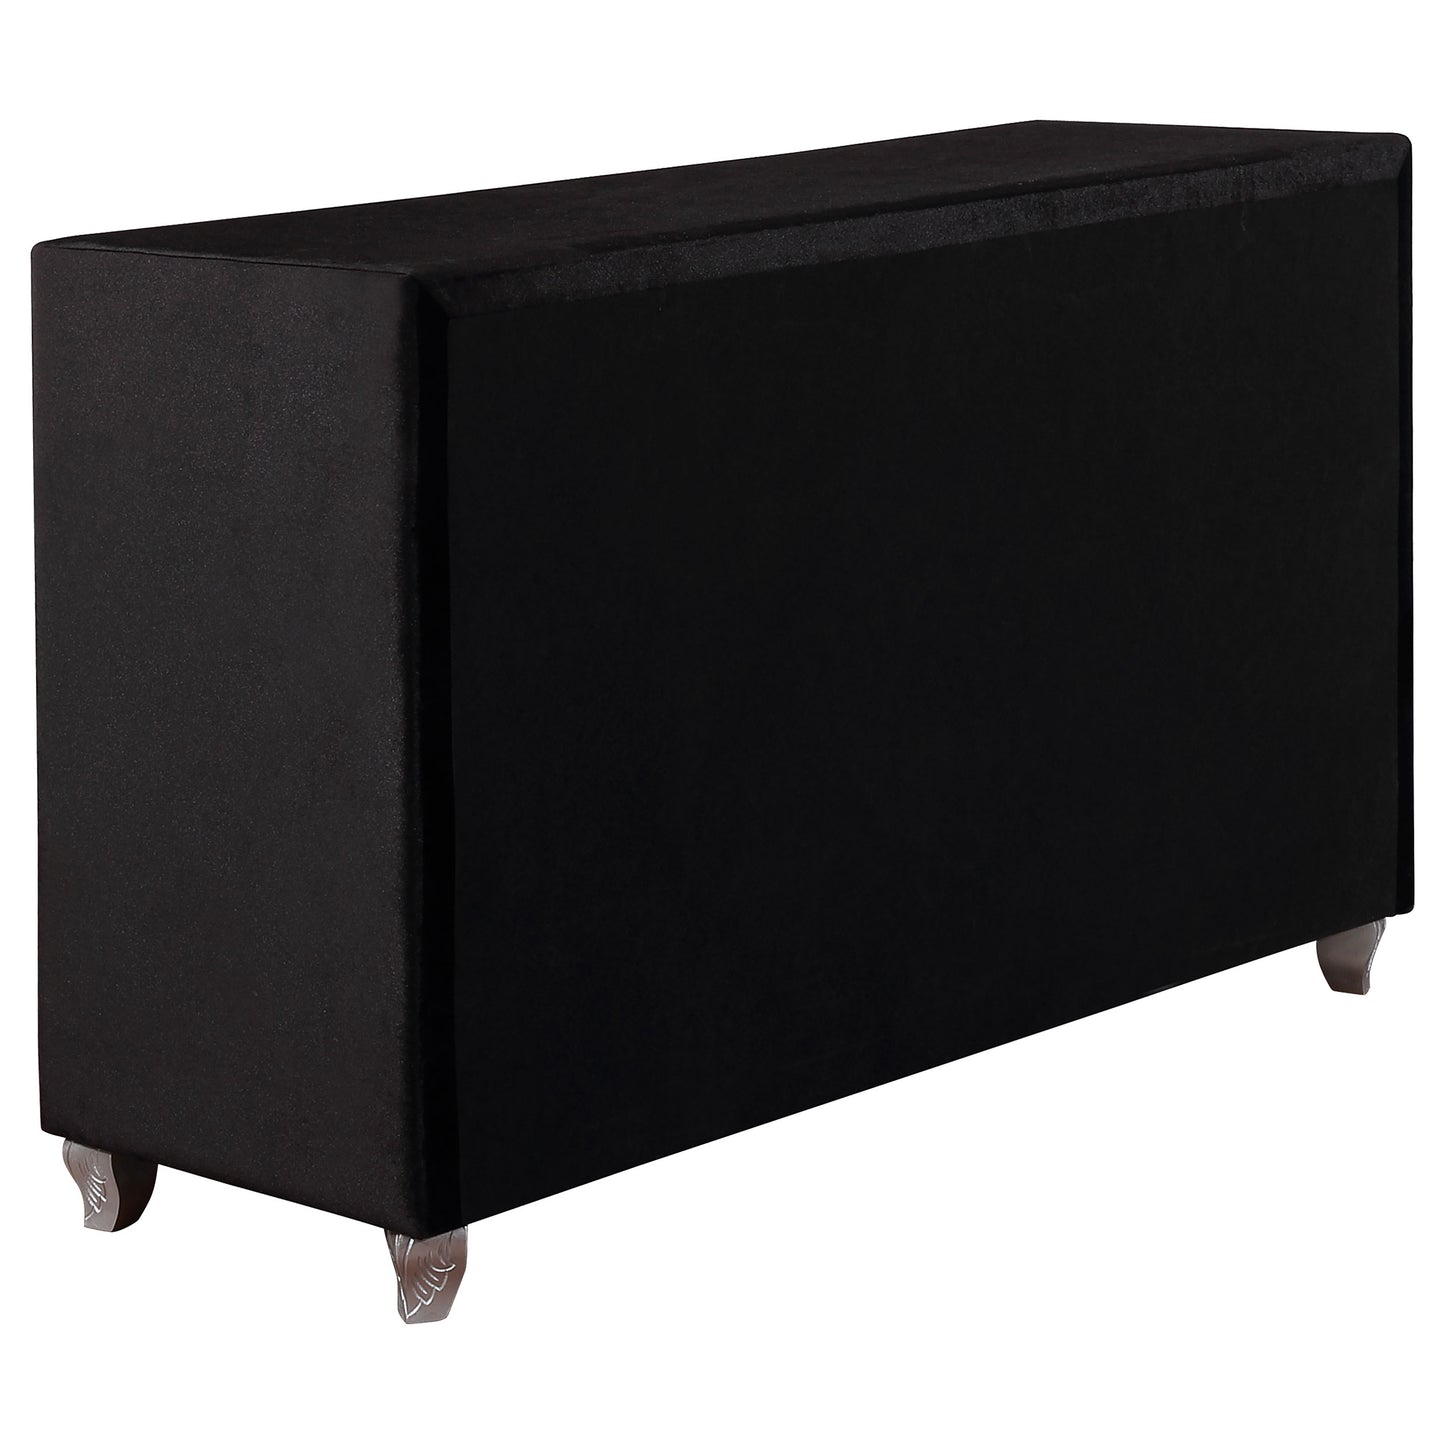 Deanna 7-drawer Upholstered Dresser Black